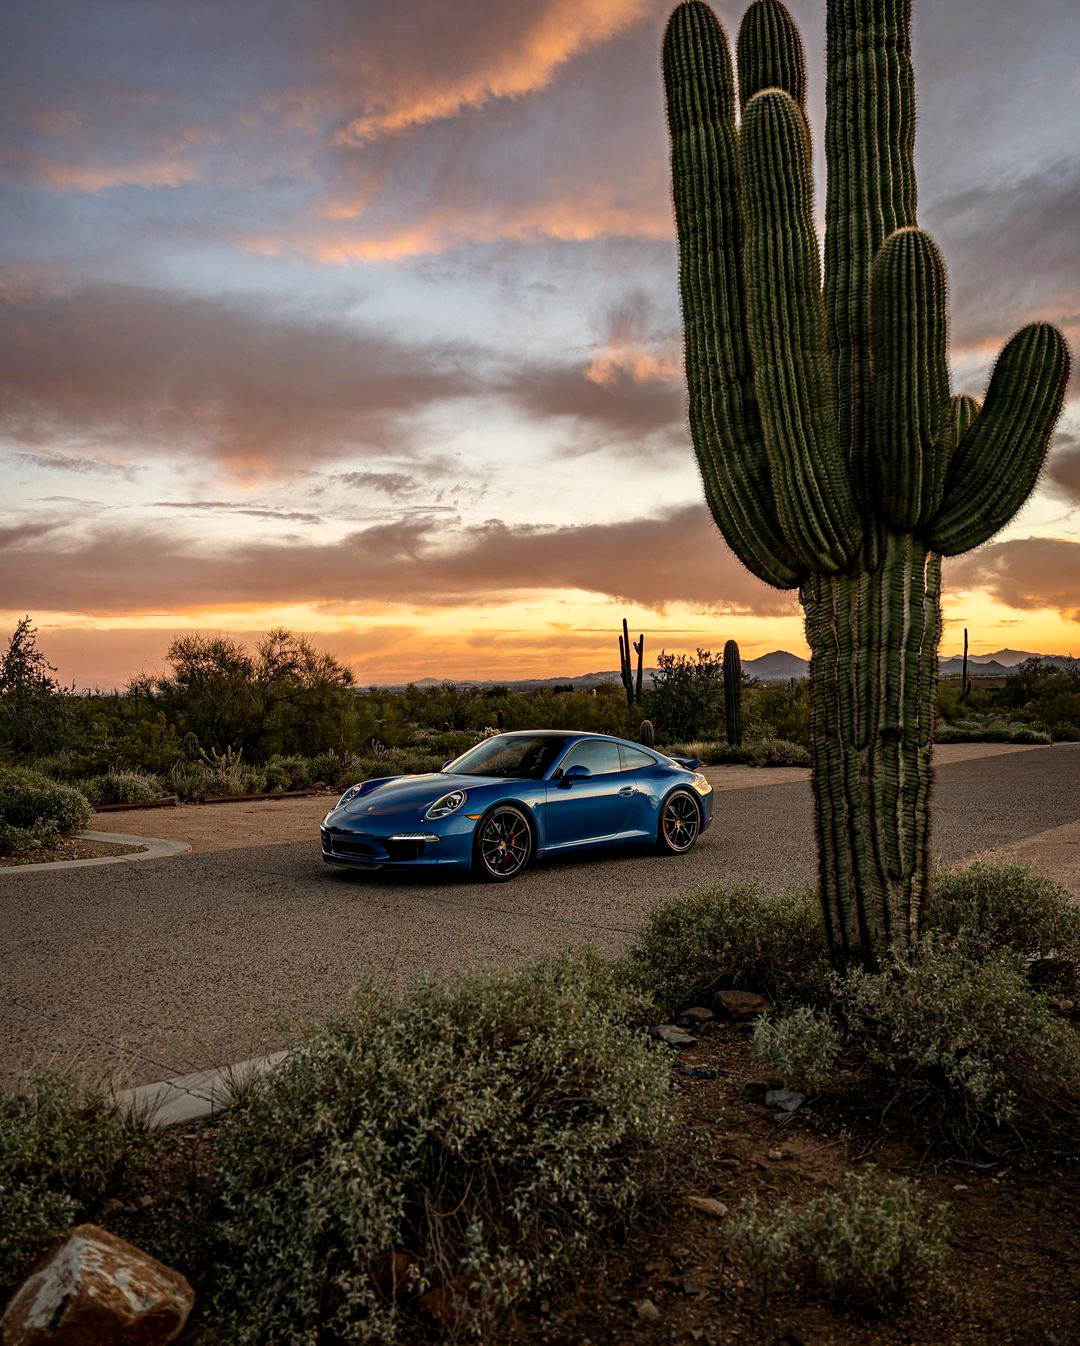 Blue Porsche 911 against desert sunset with saguaro cactus